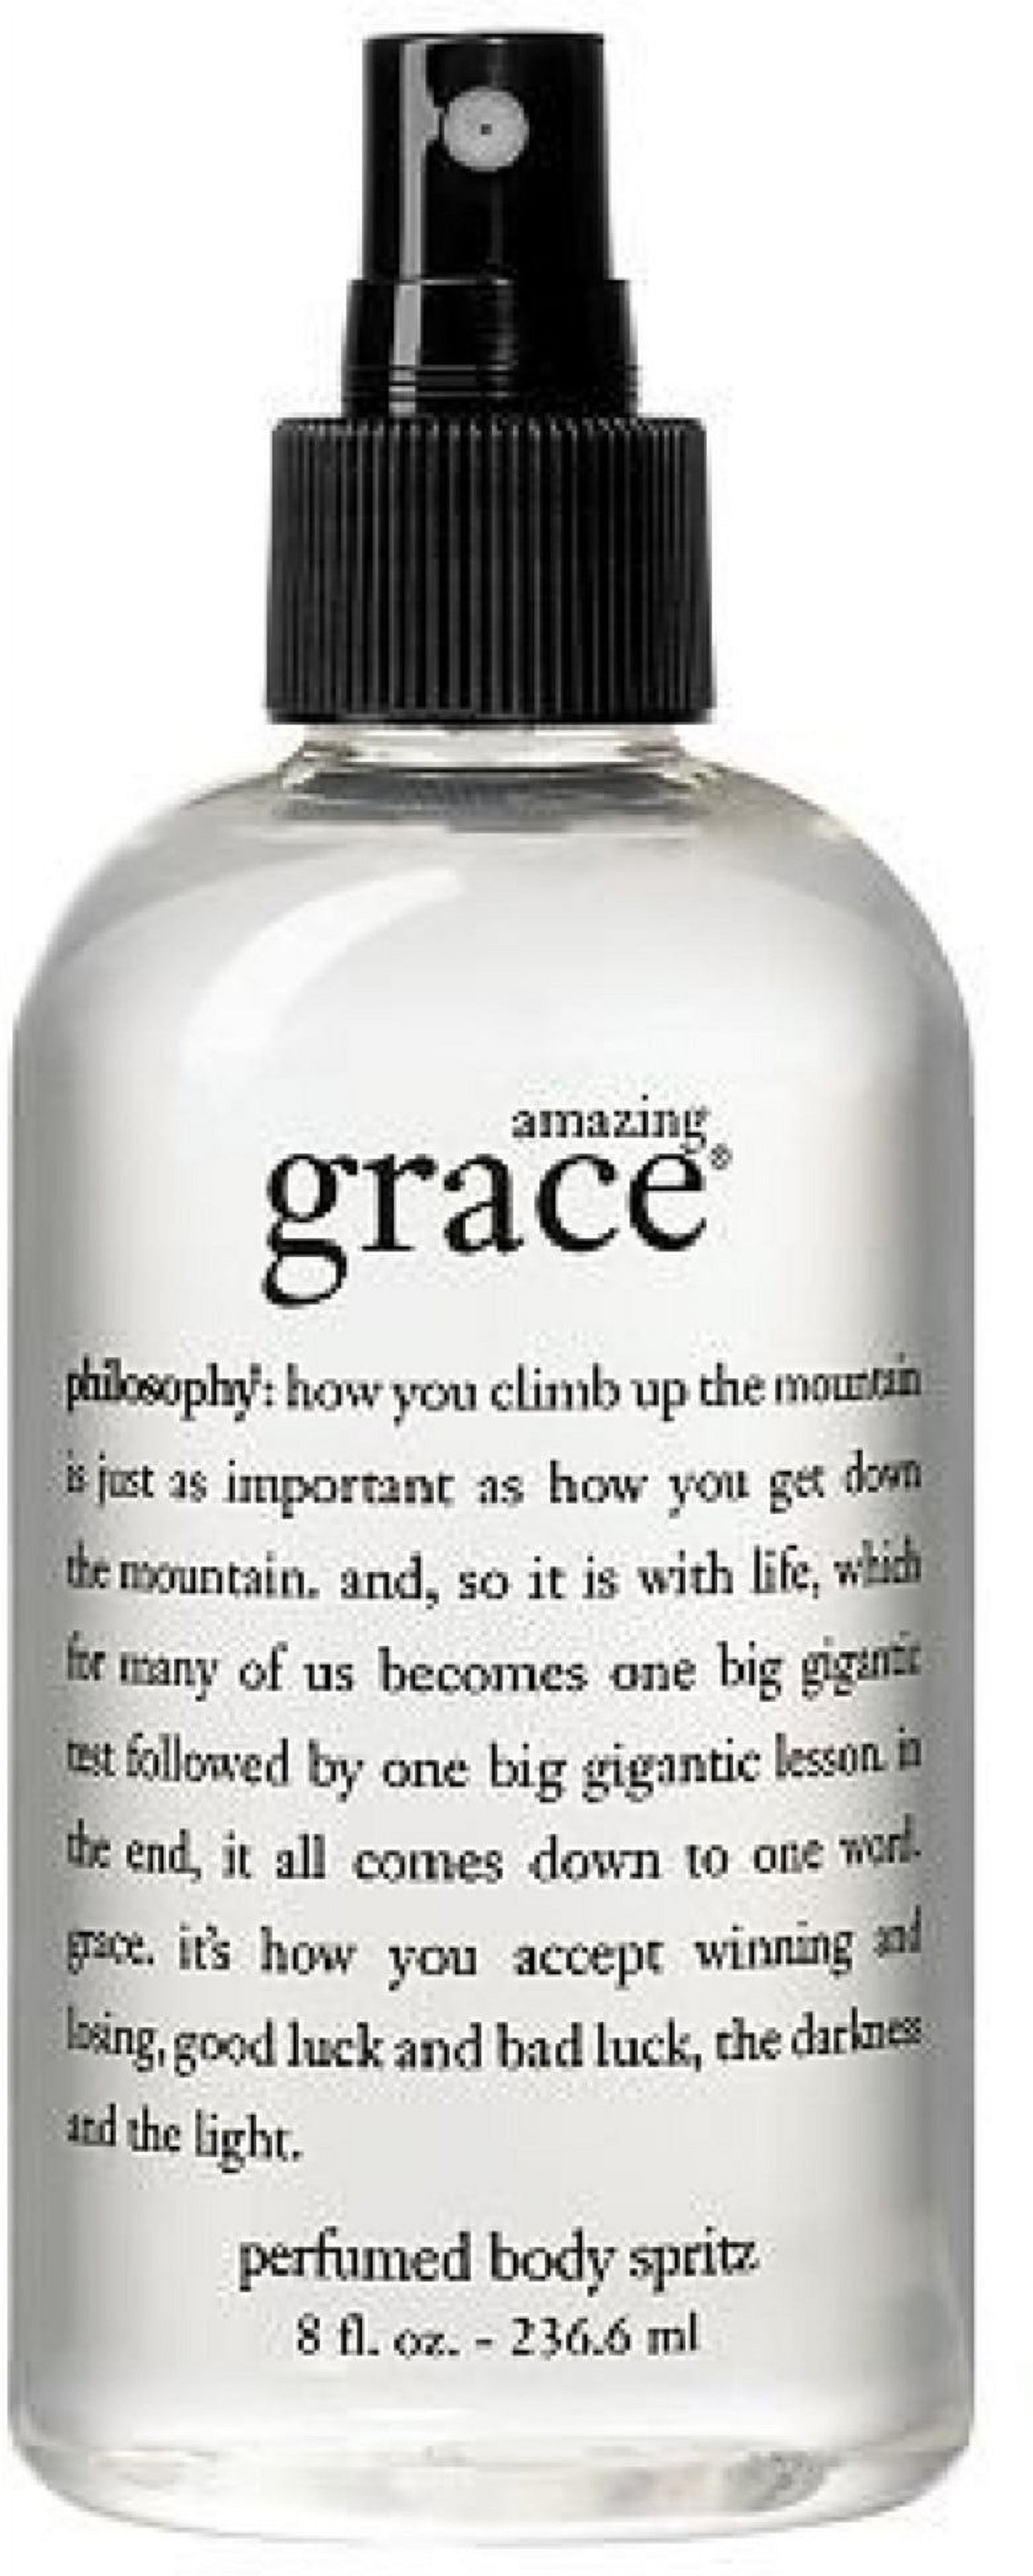 Philosophy Pure Grace Body Spritz